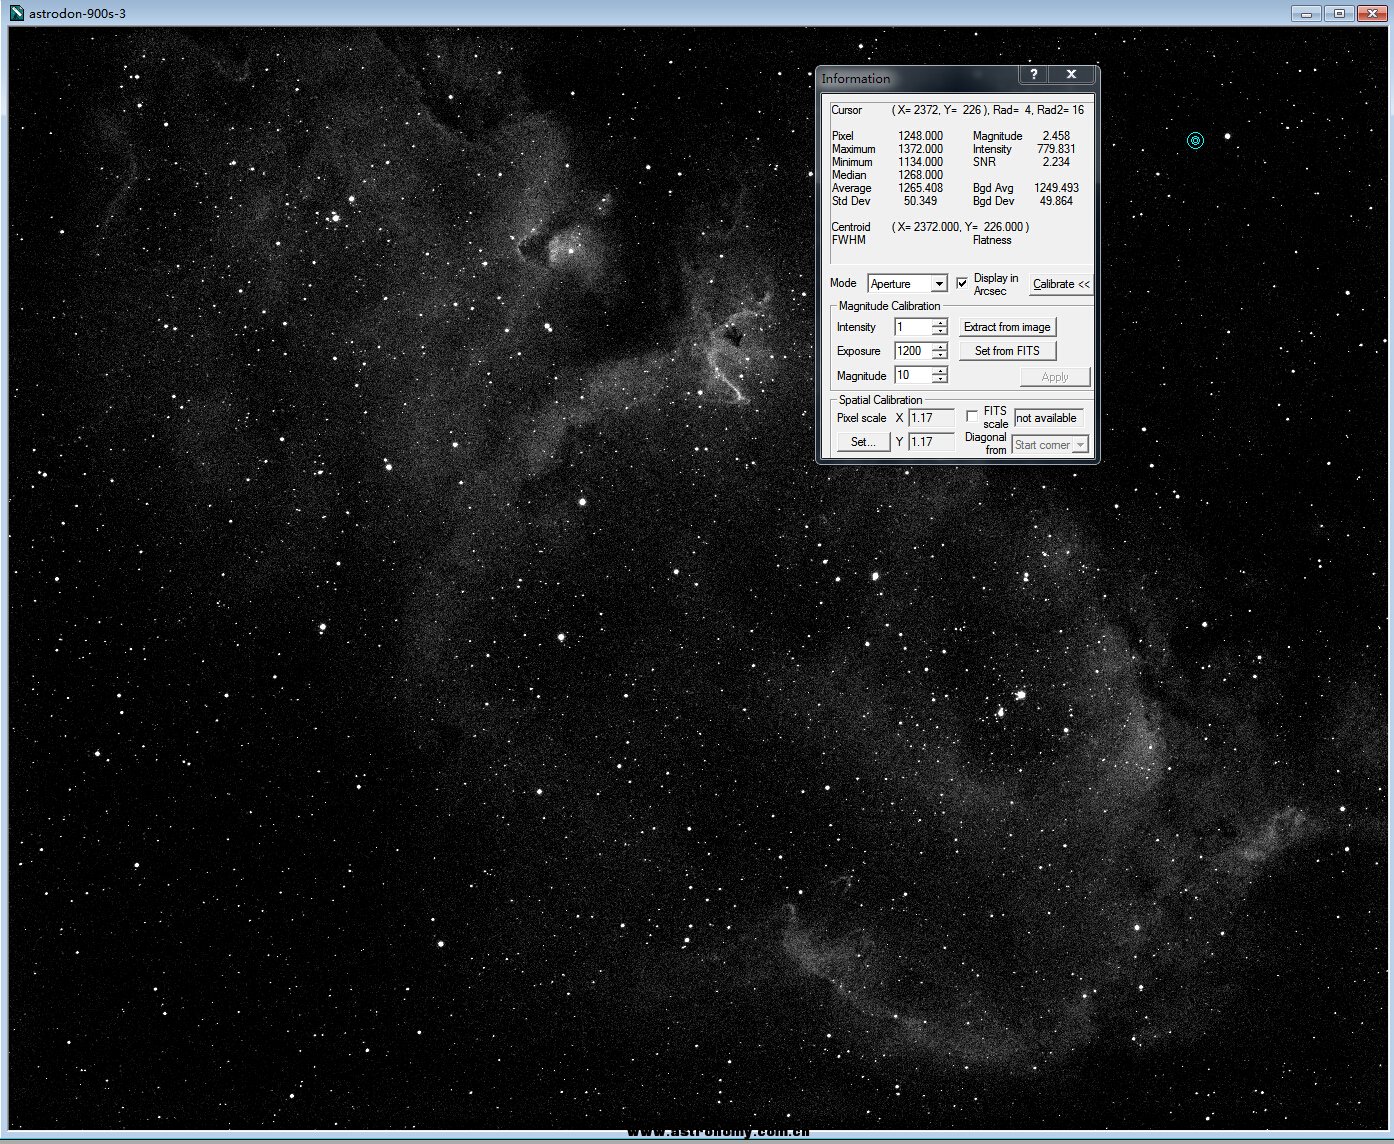 astrodon-900s-3-information.jpg